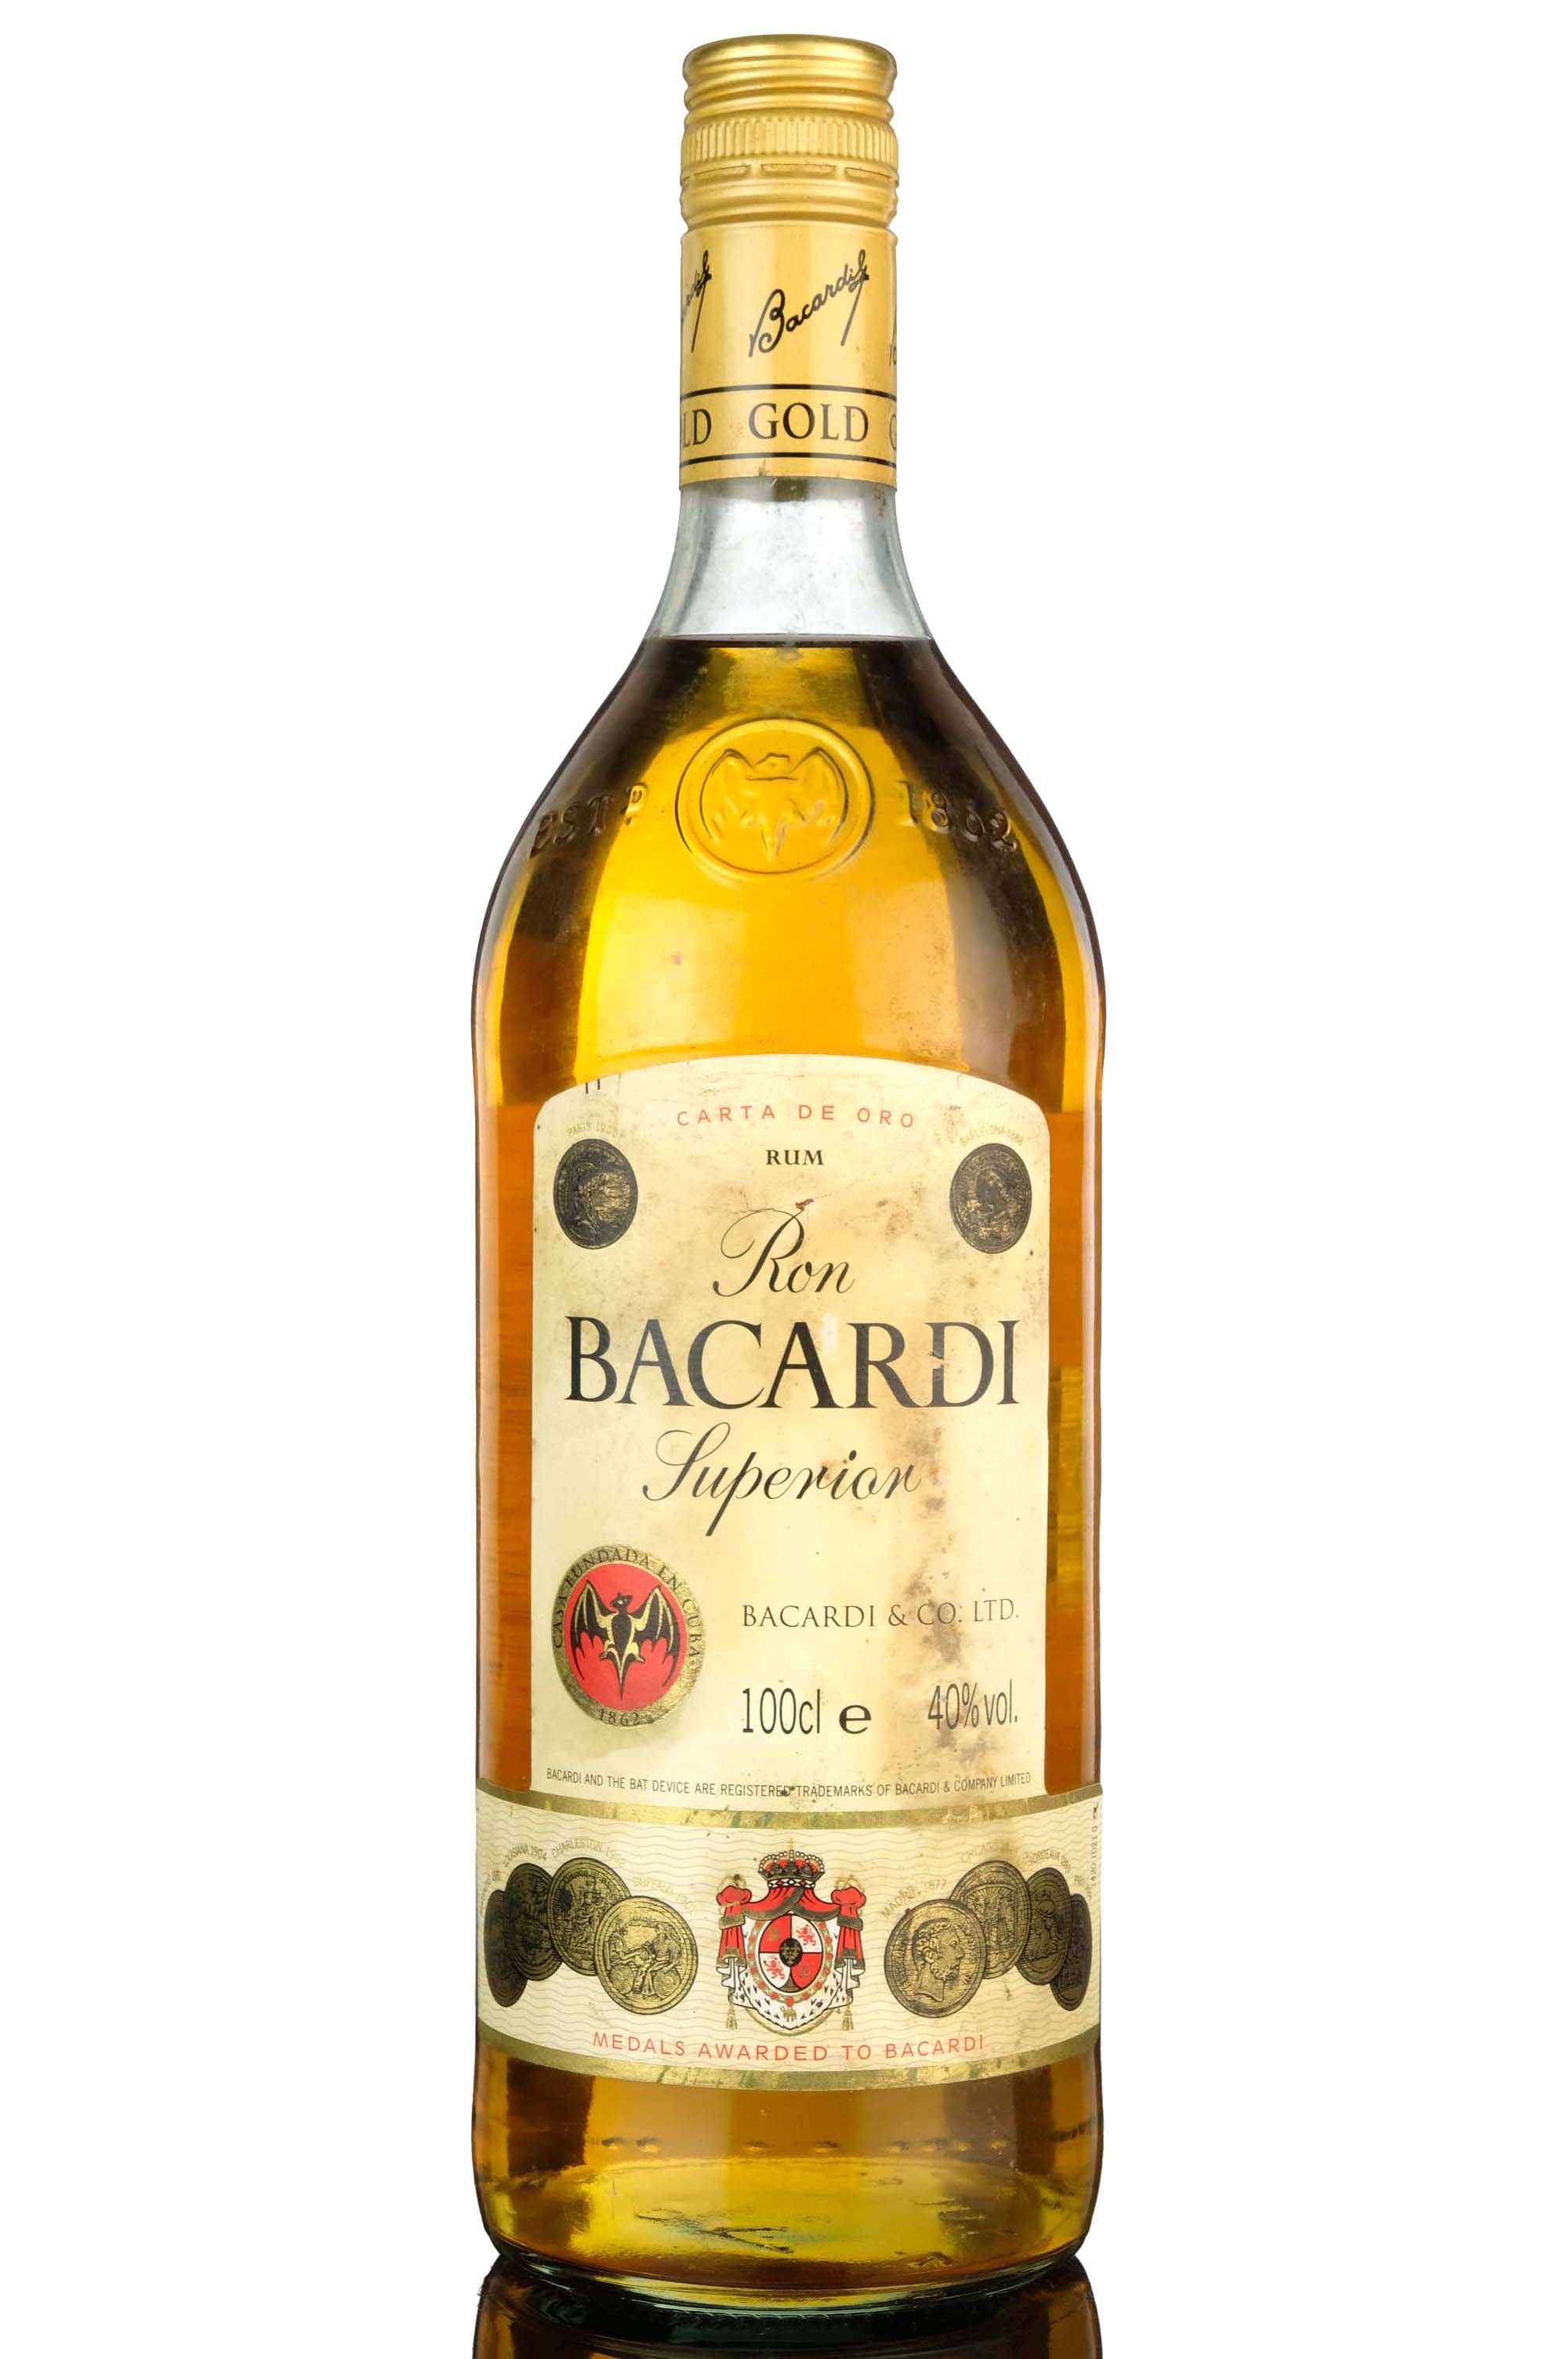 Bacardi Gold - 1 Litre